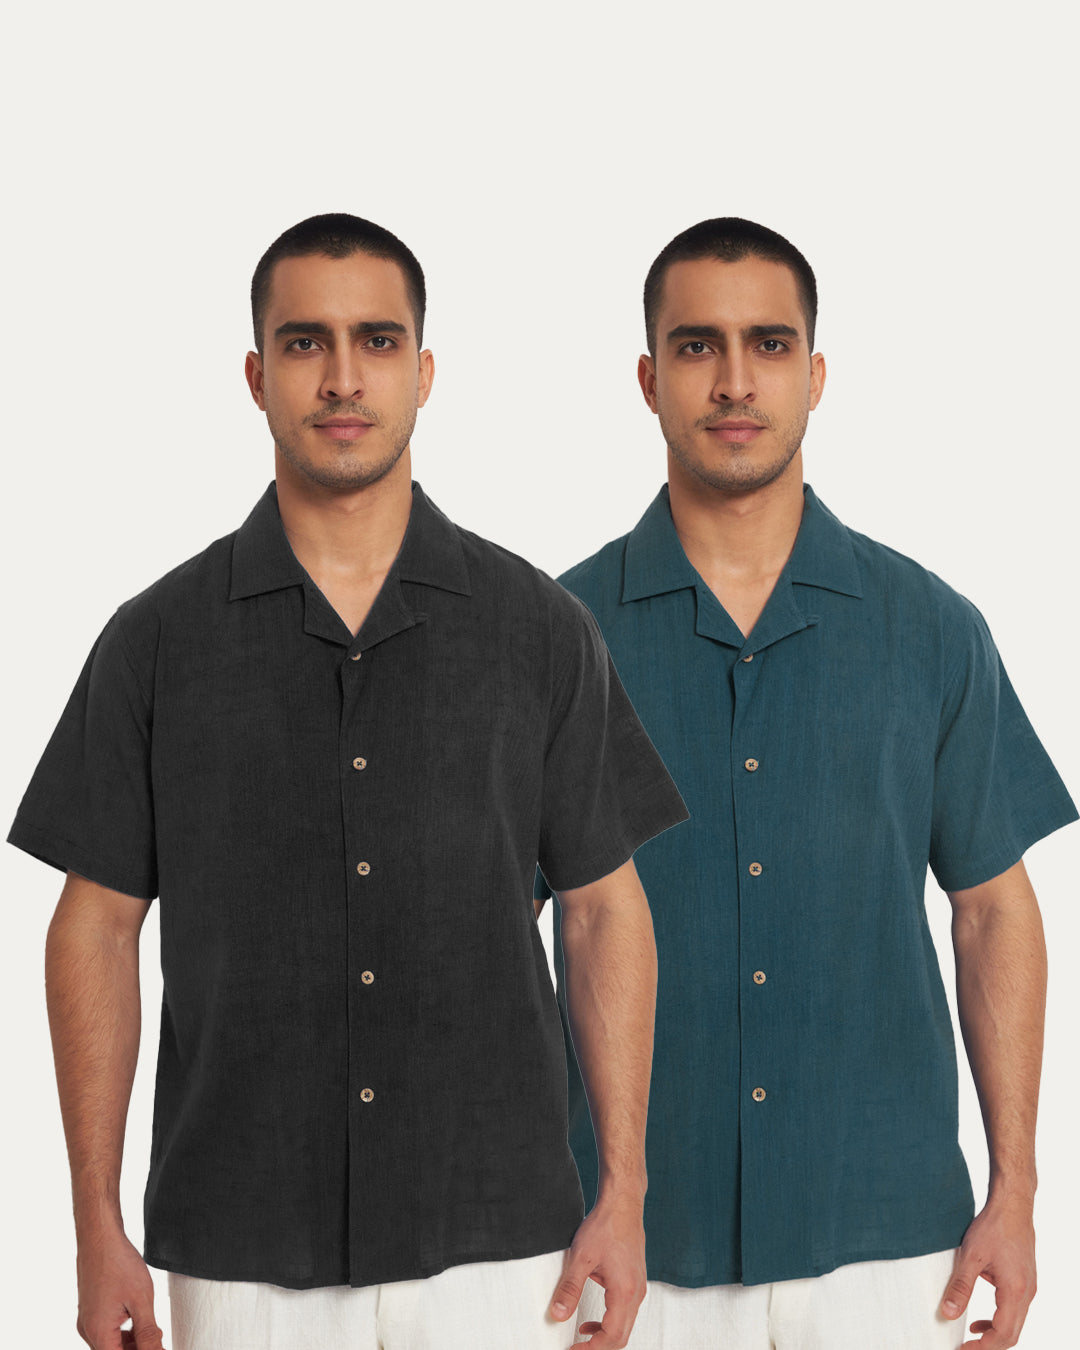 Combo : Classic Deep Teal & Black Men's Half Sleeves Shirt